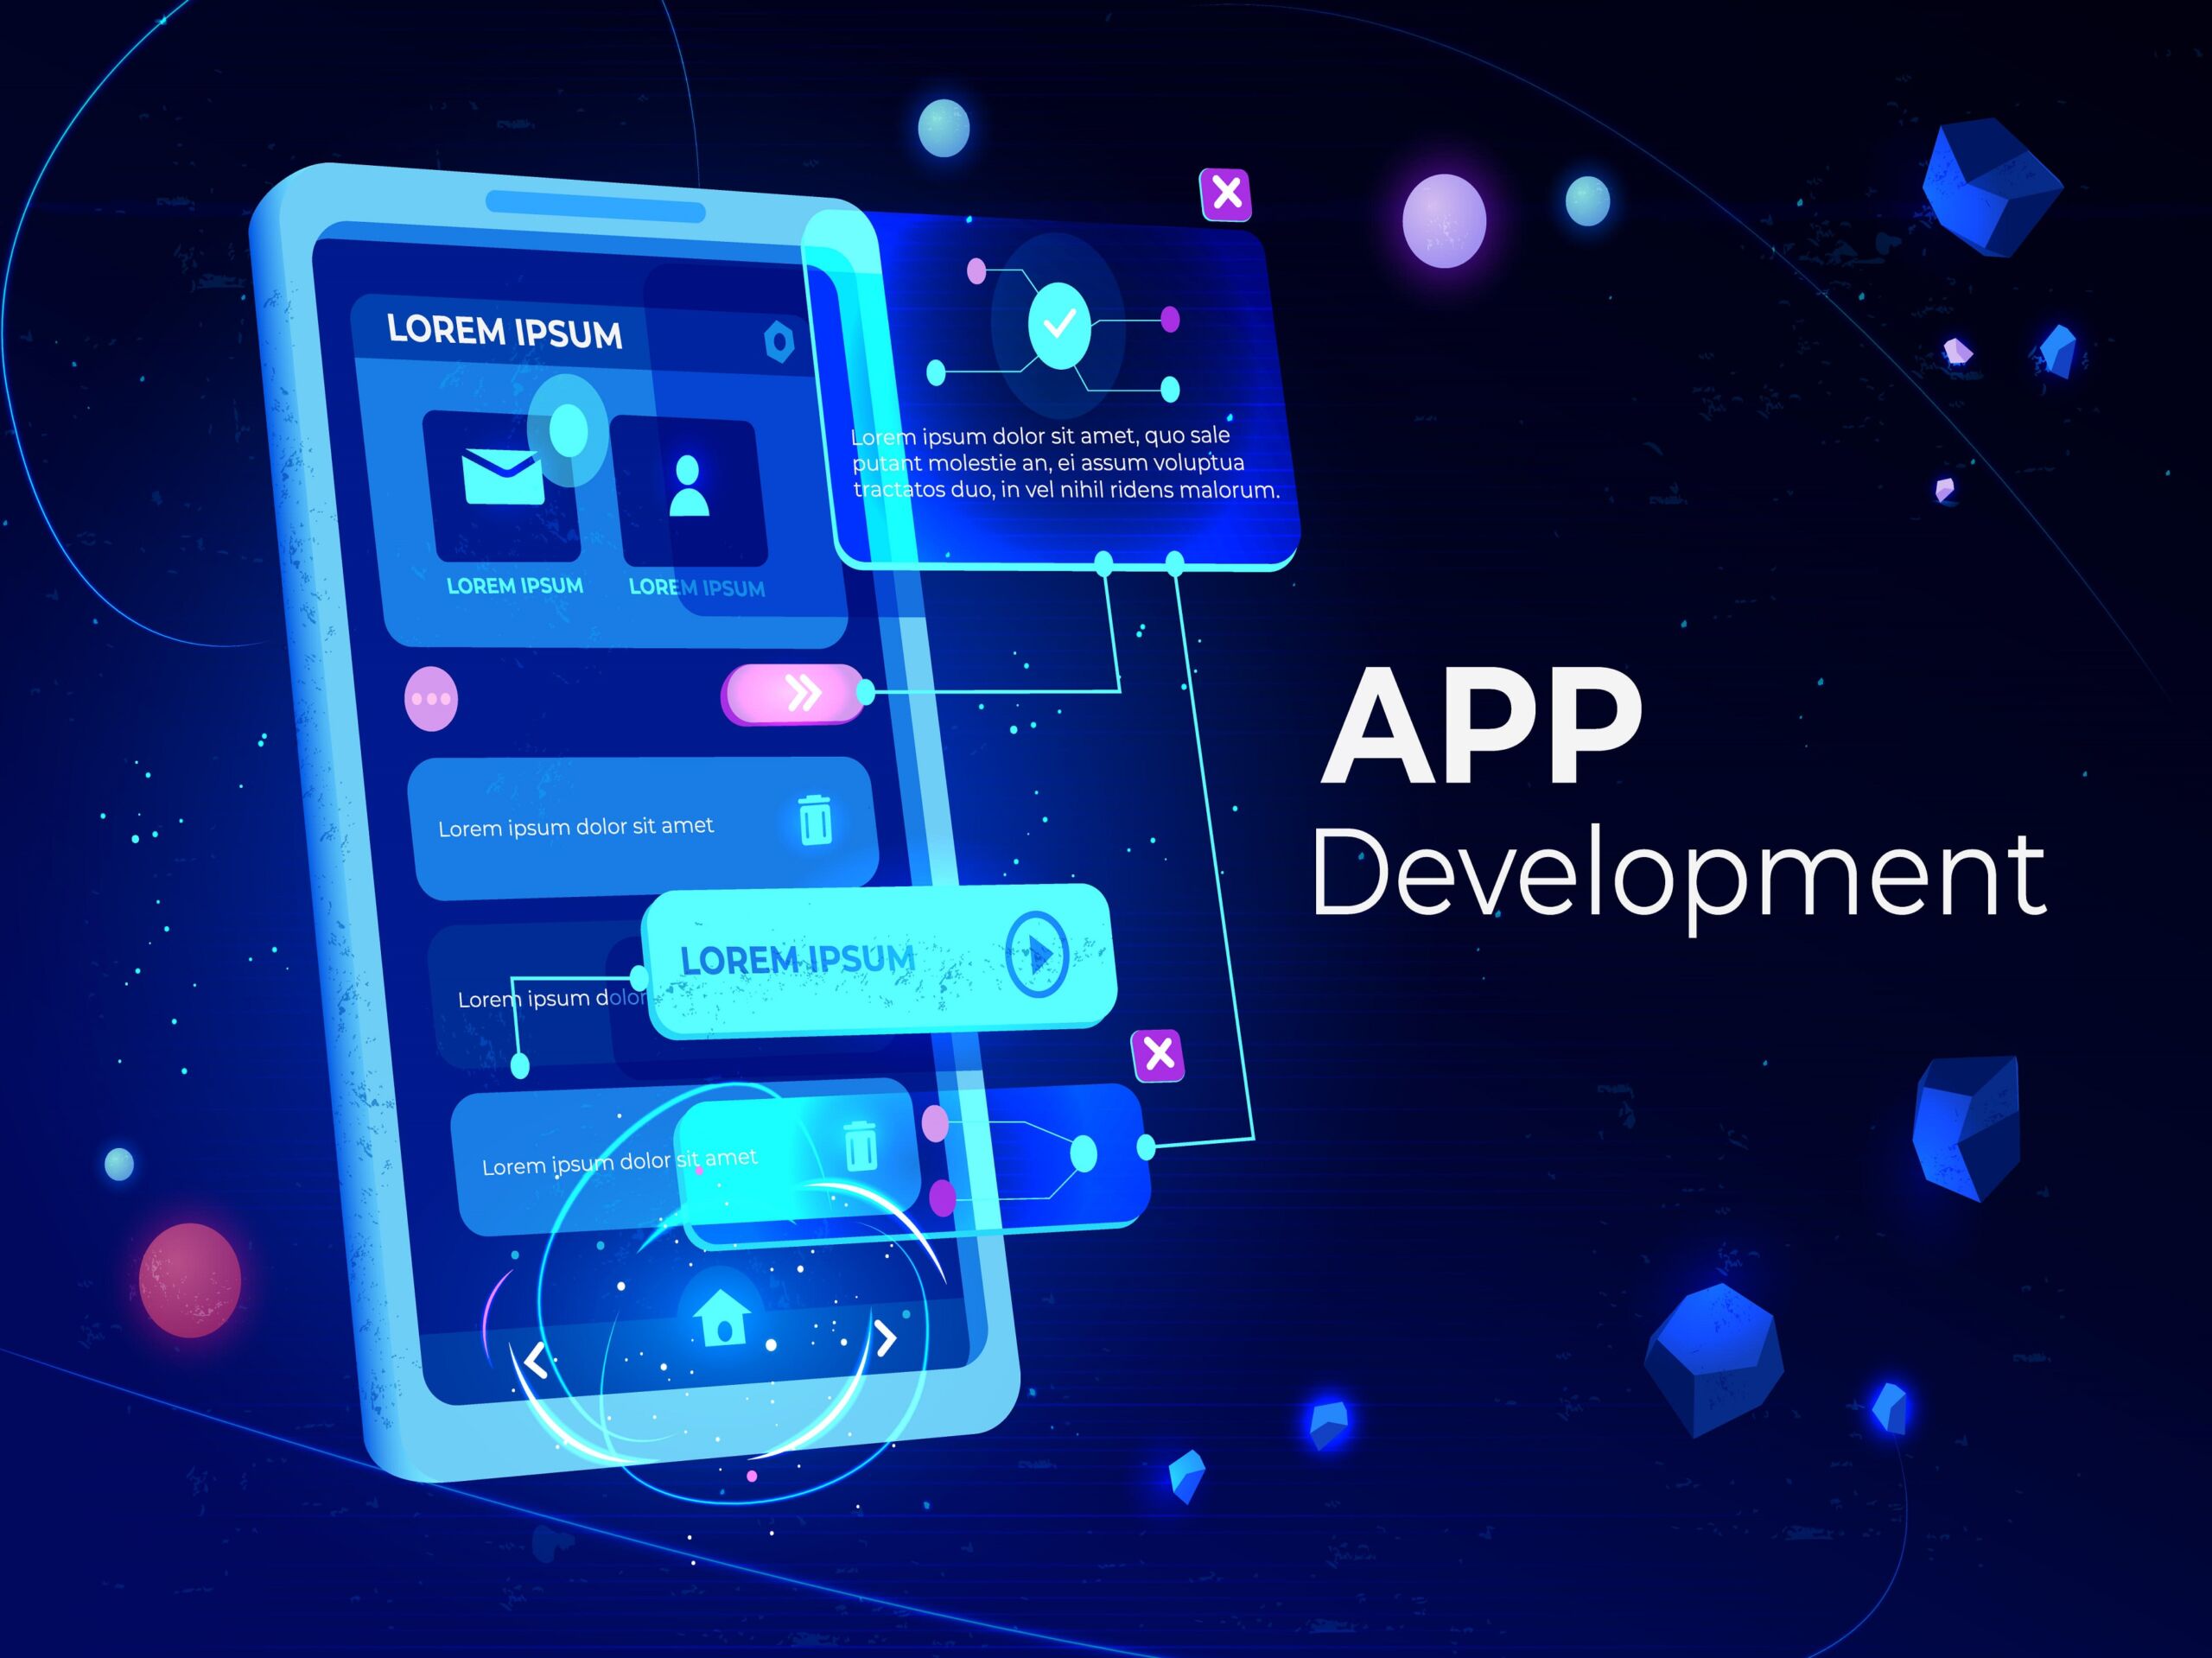 Top 10 Programming Languages for Mobile App Development